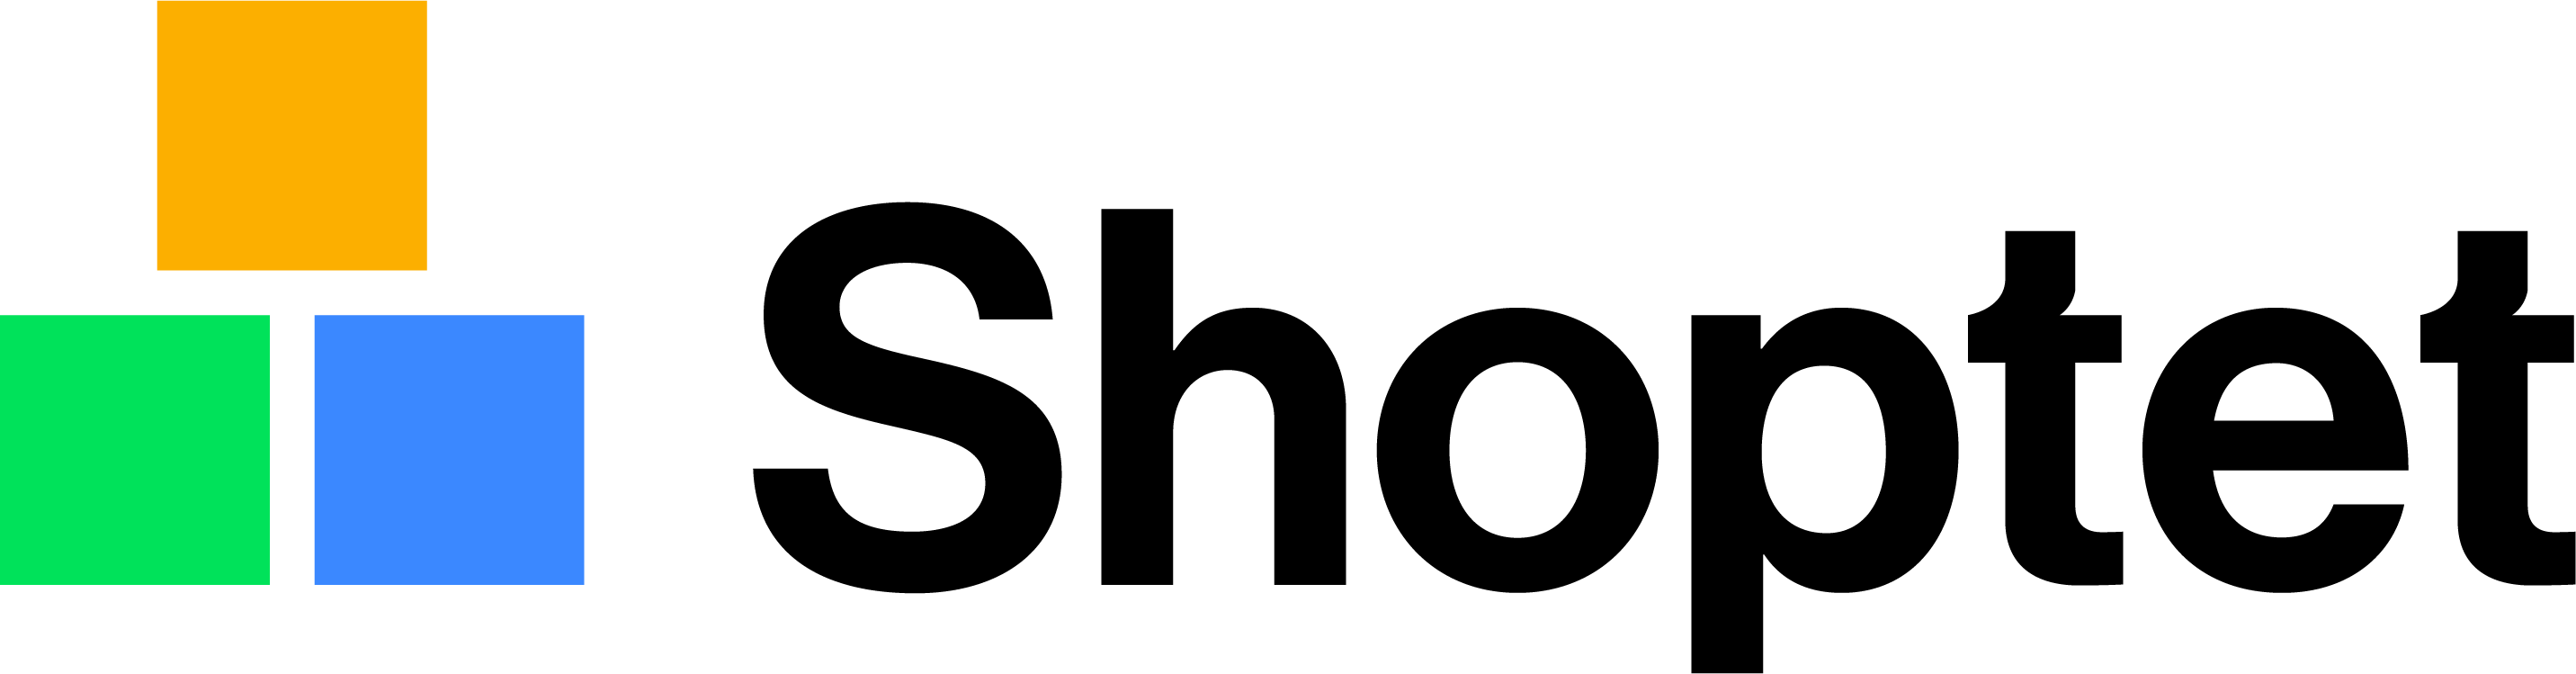 shoptet-logo-primary